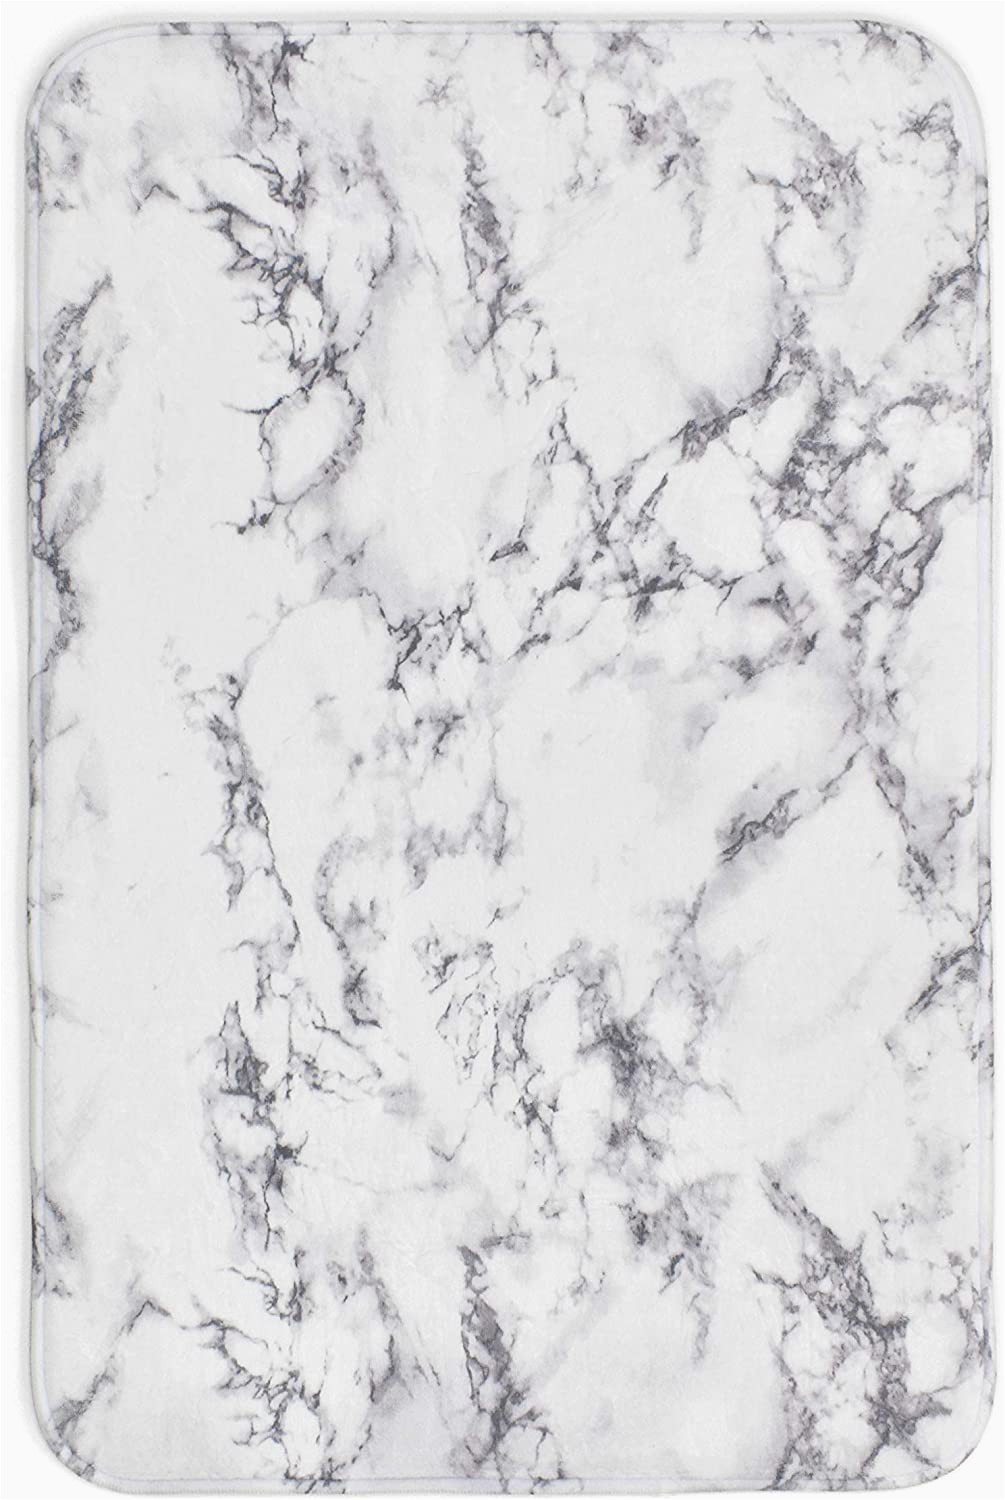 Granite Contemporary Bath Rug Ihidirect White Grey Marble Granite Effect Anti Slip Bath Mat Rug or Pedestal Bath Mat